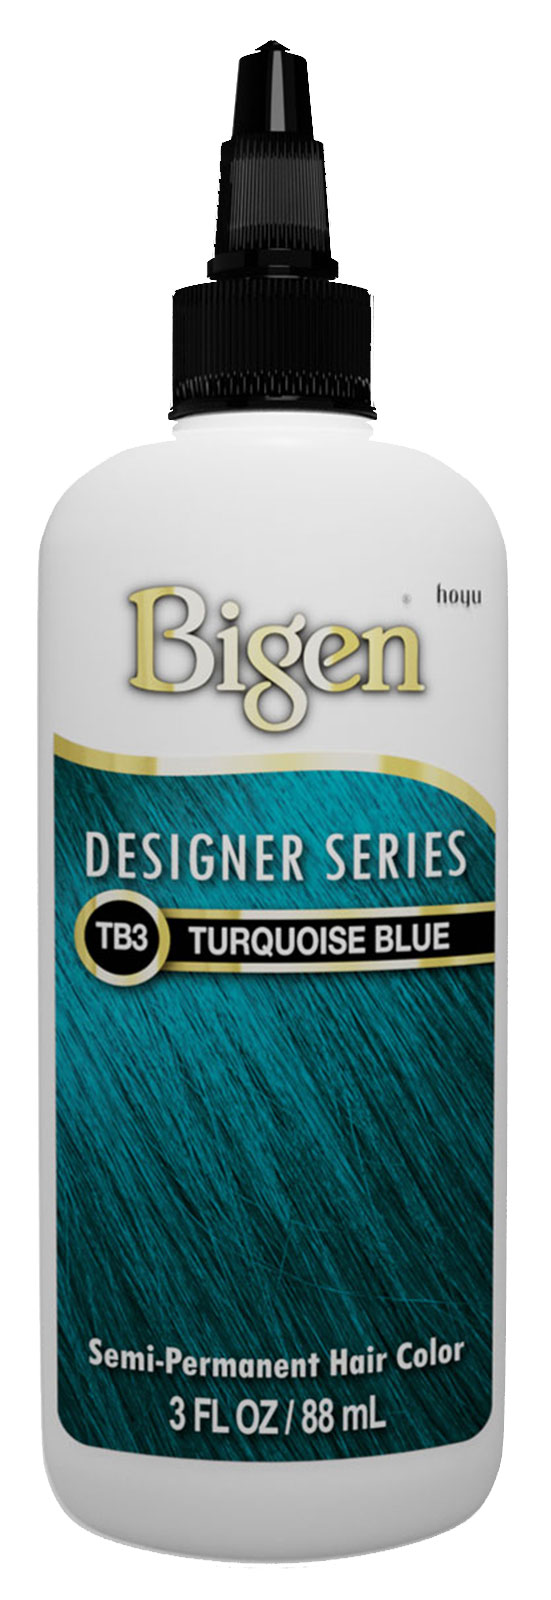 TB3-Turquoise Blue